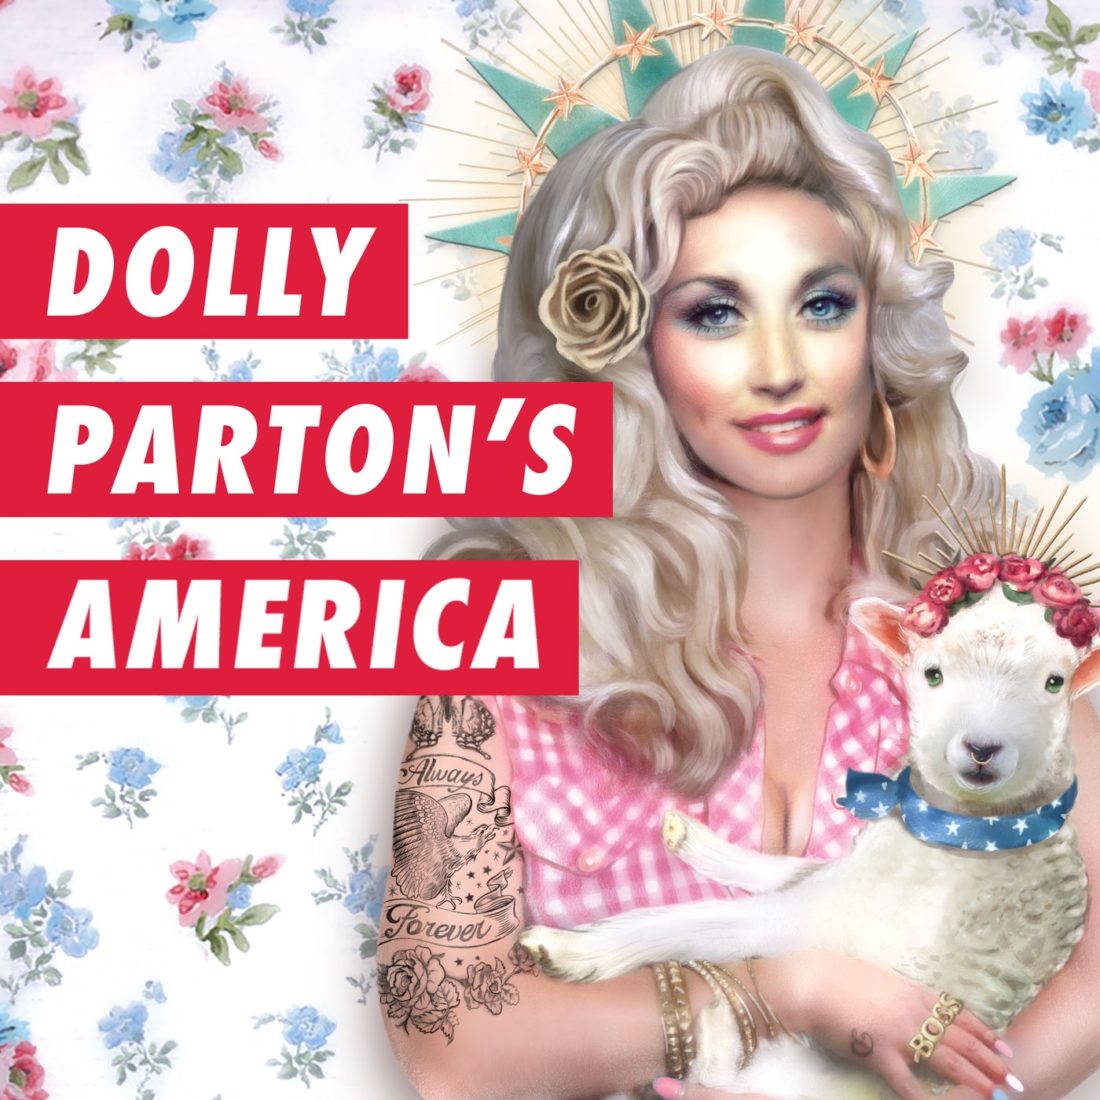 Behind Dolly Parton's America